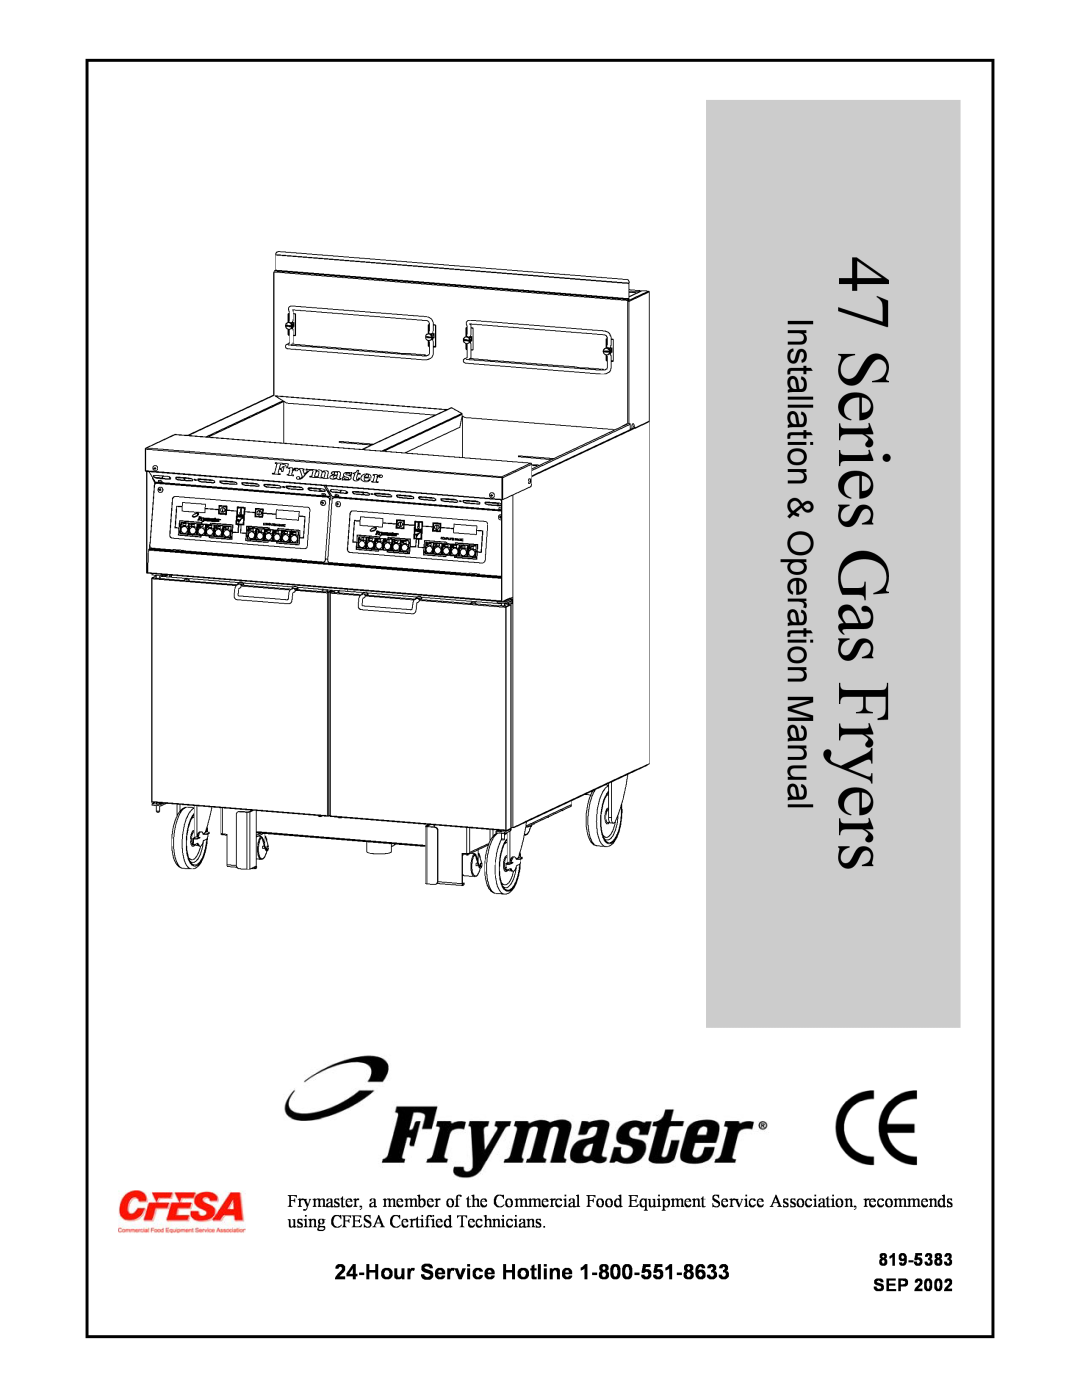 Frymaster 47 Series operation manual Series Gas Fryers, 819-5383 